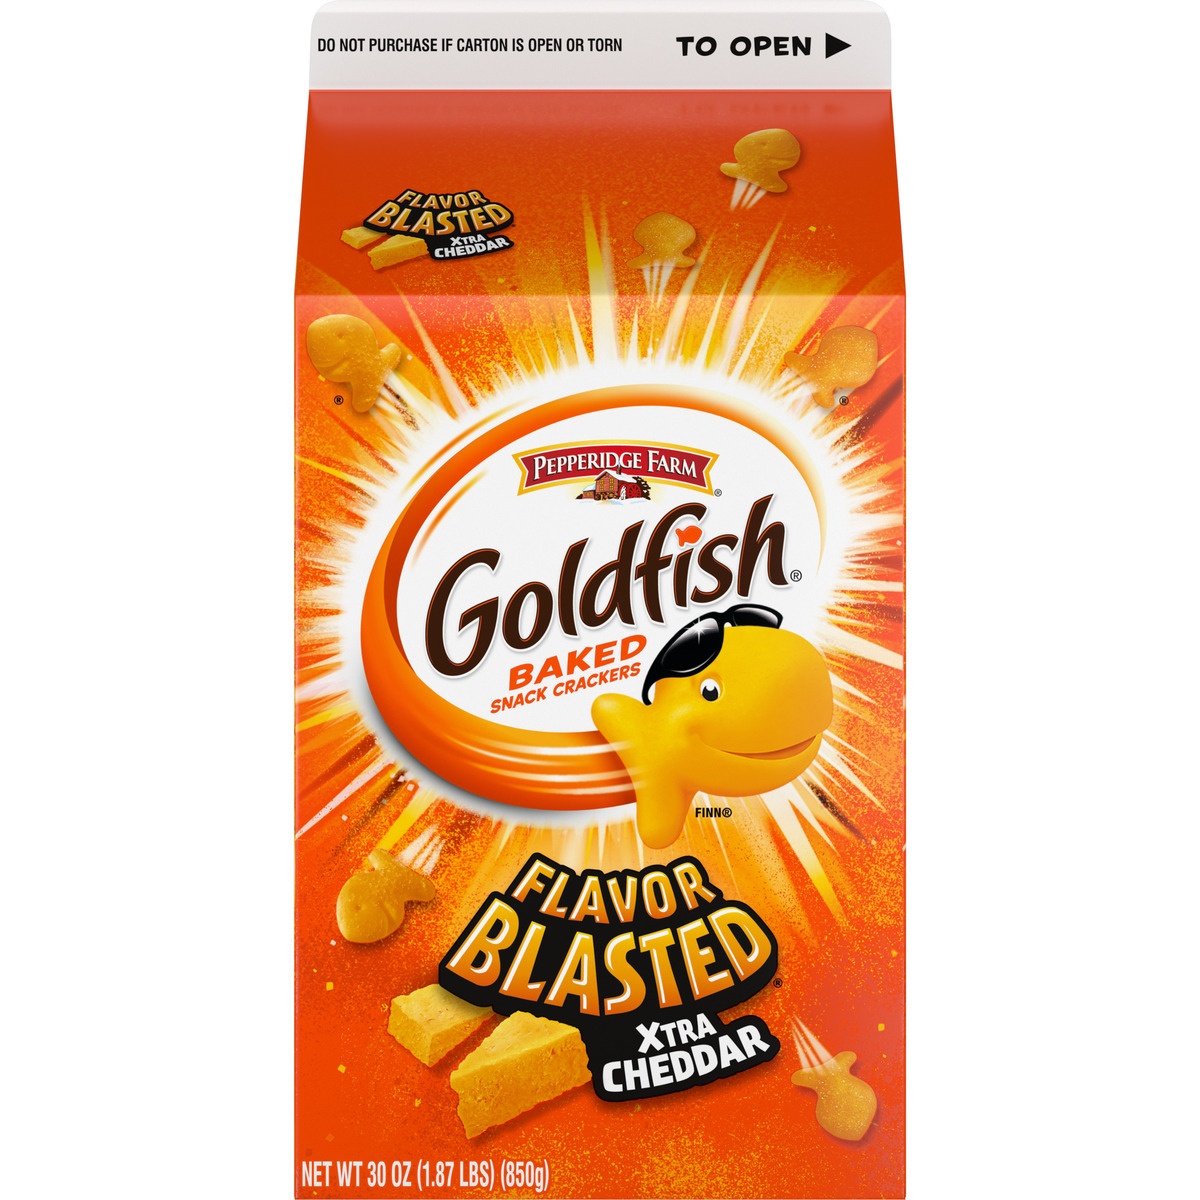 slide 10 of 11, Goldfish Flavor Blasted Xtra Cheddar Baked Snack Crackers, 30 oz